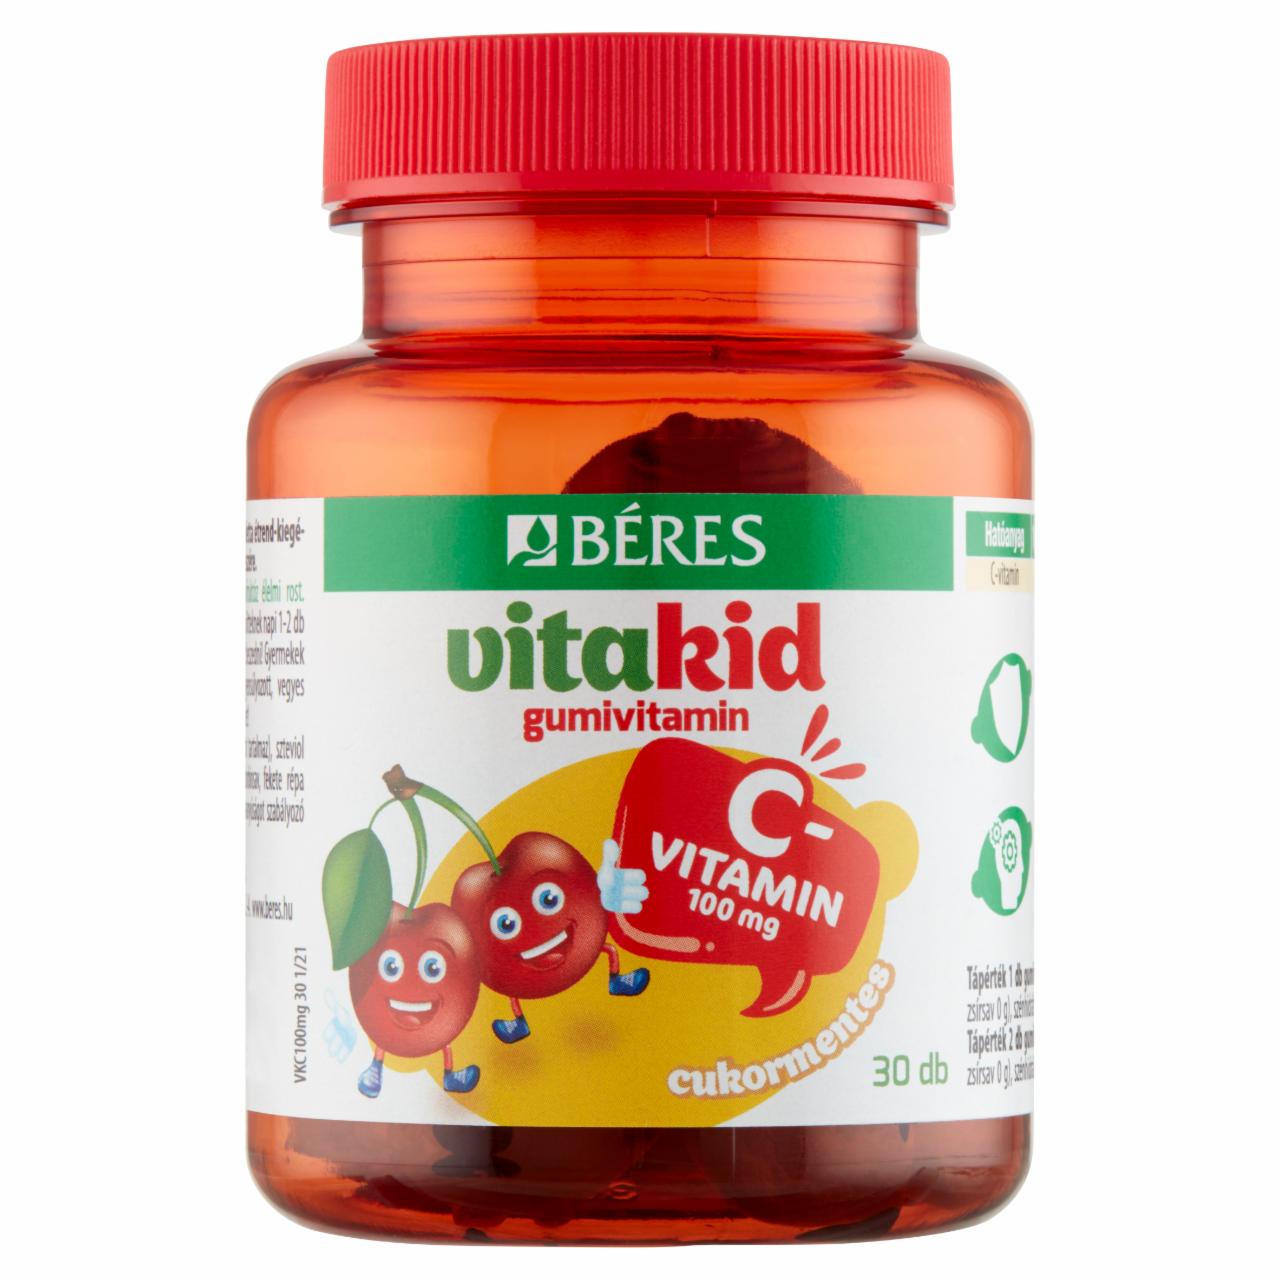 Képek - Béres VitaKid C-vitamin 100 mg cukormentes gumitabletta étrend-kiegészítő 30 x 3 g (90 g)